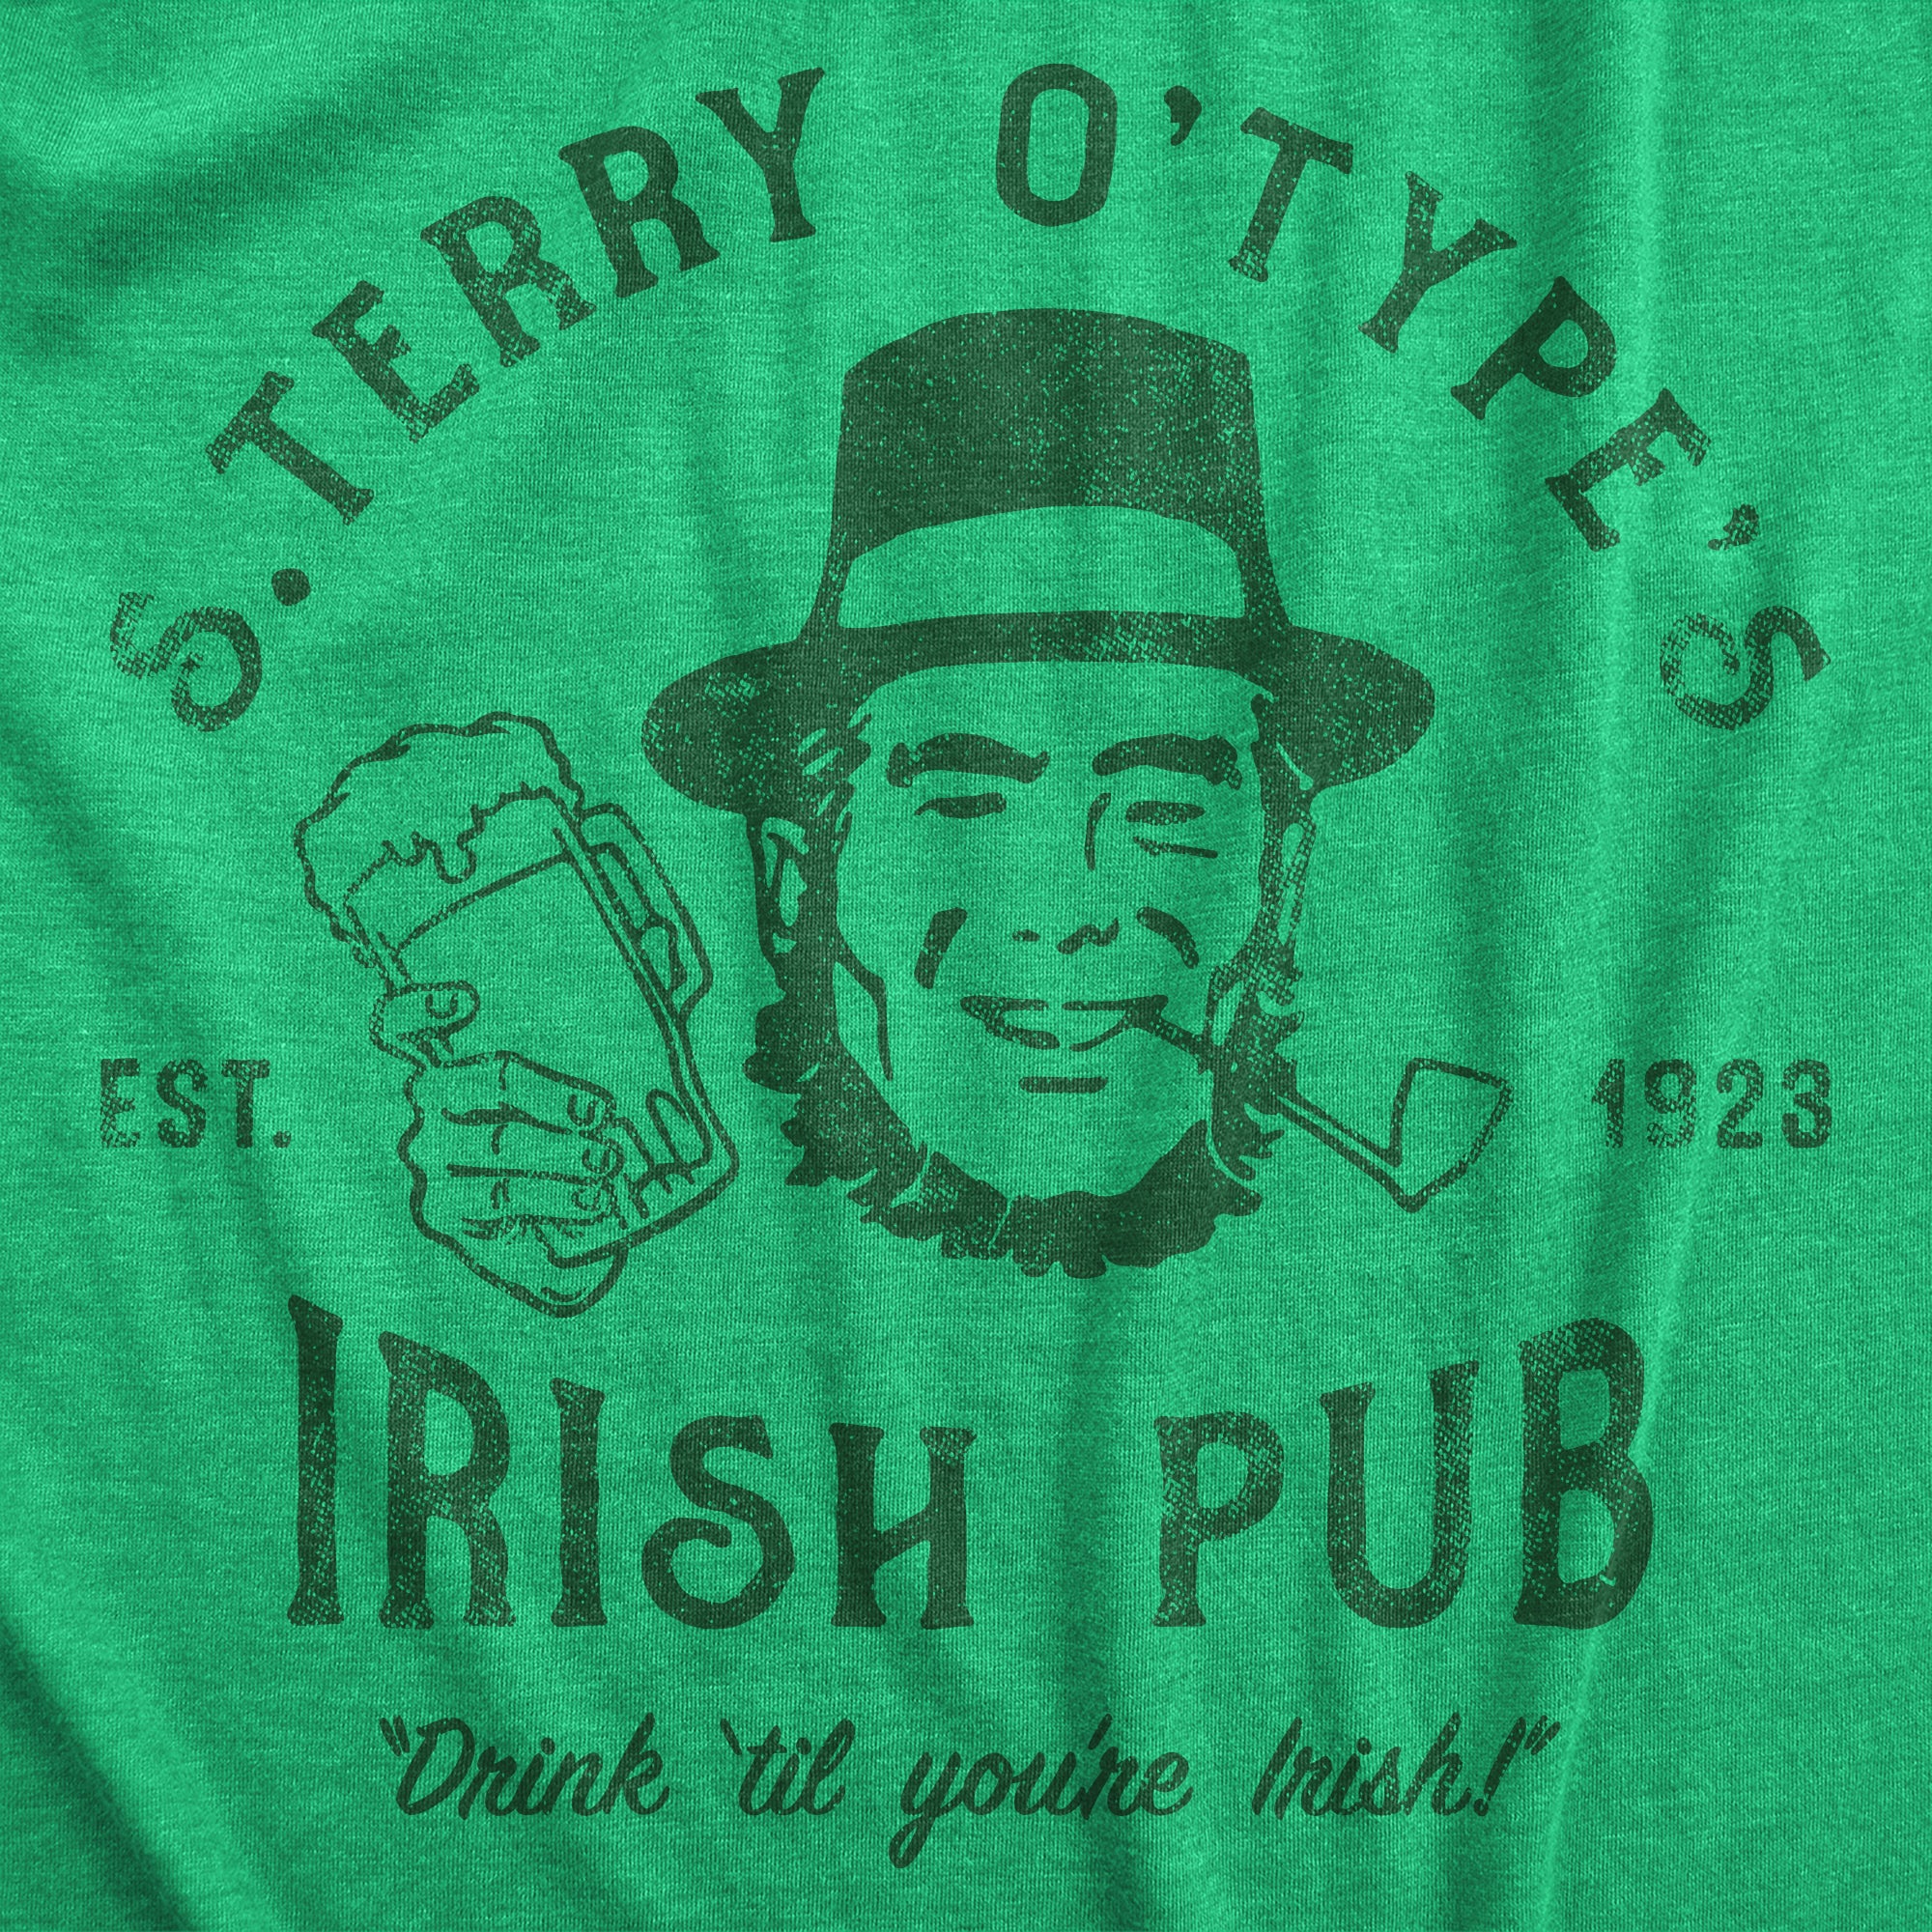 Funny Heather Green - IRISHPUB S Terry Otypes Irish Pub Womens T Shirt Nerdy Saint Patrick's Day Drinking Sarcastic Tee